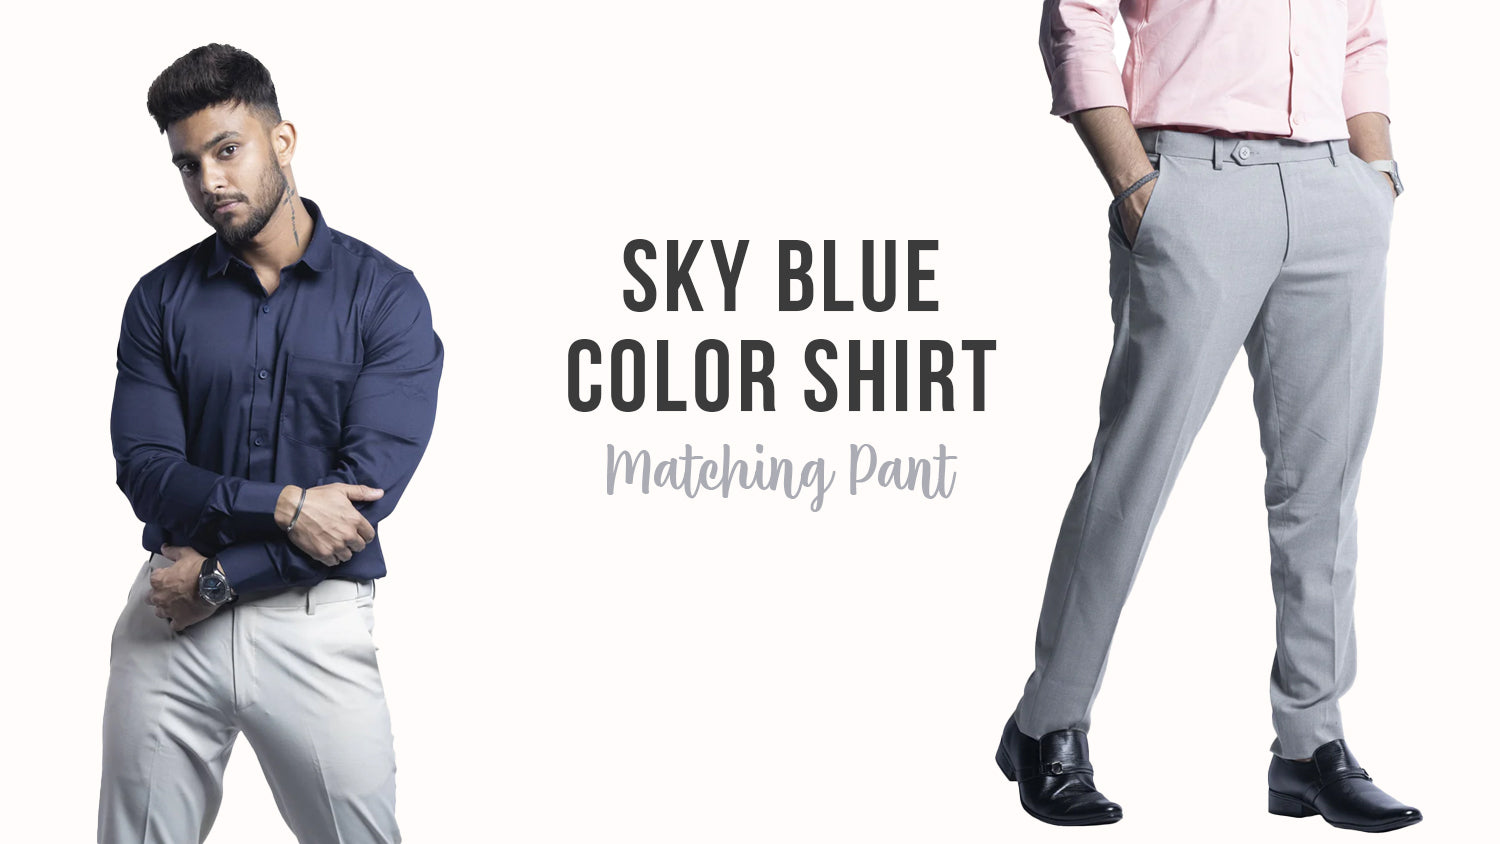 Blue Shirt Combination Pants Ideas | Blue Shirt Matching Pants - TiptopGents